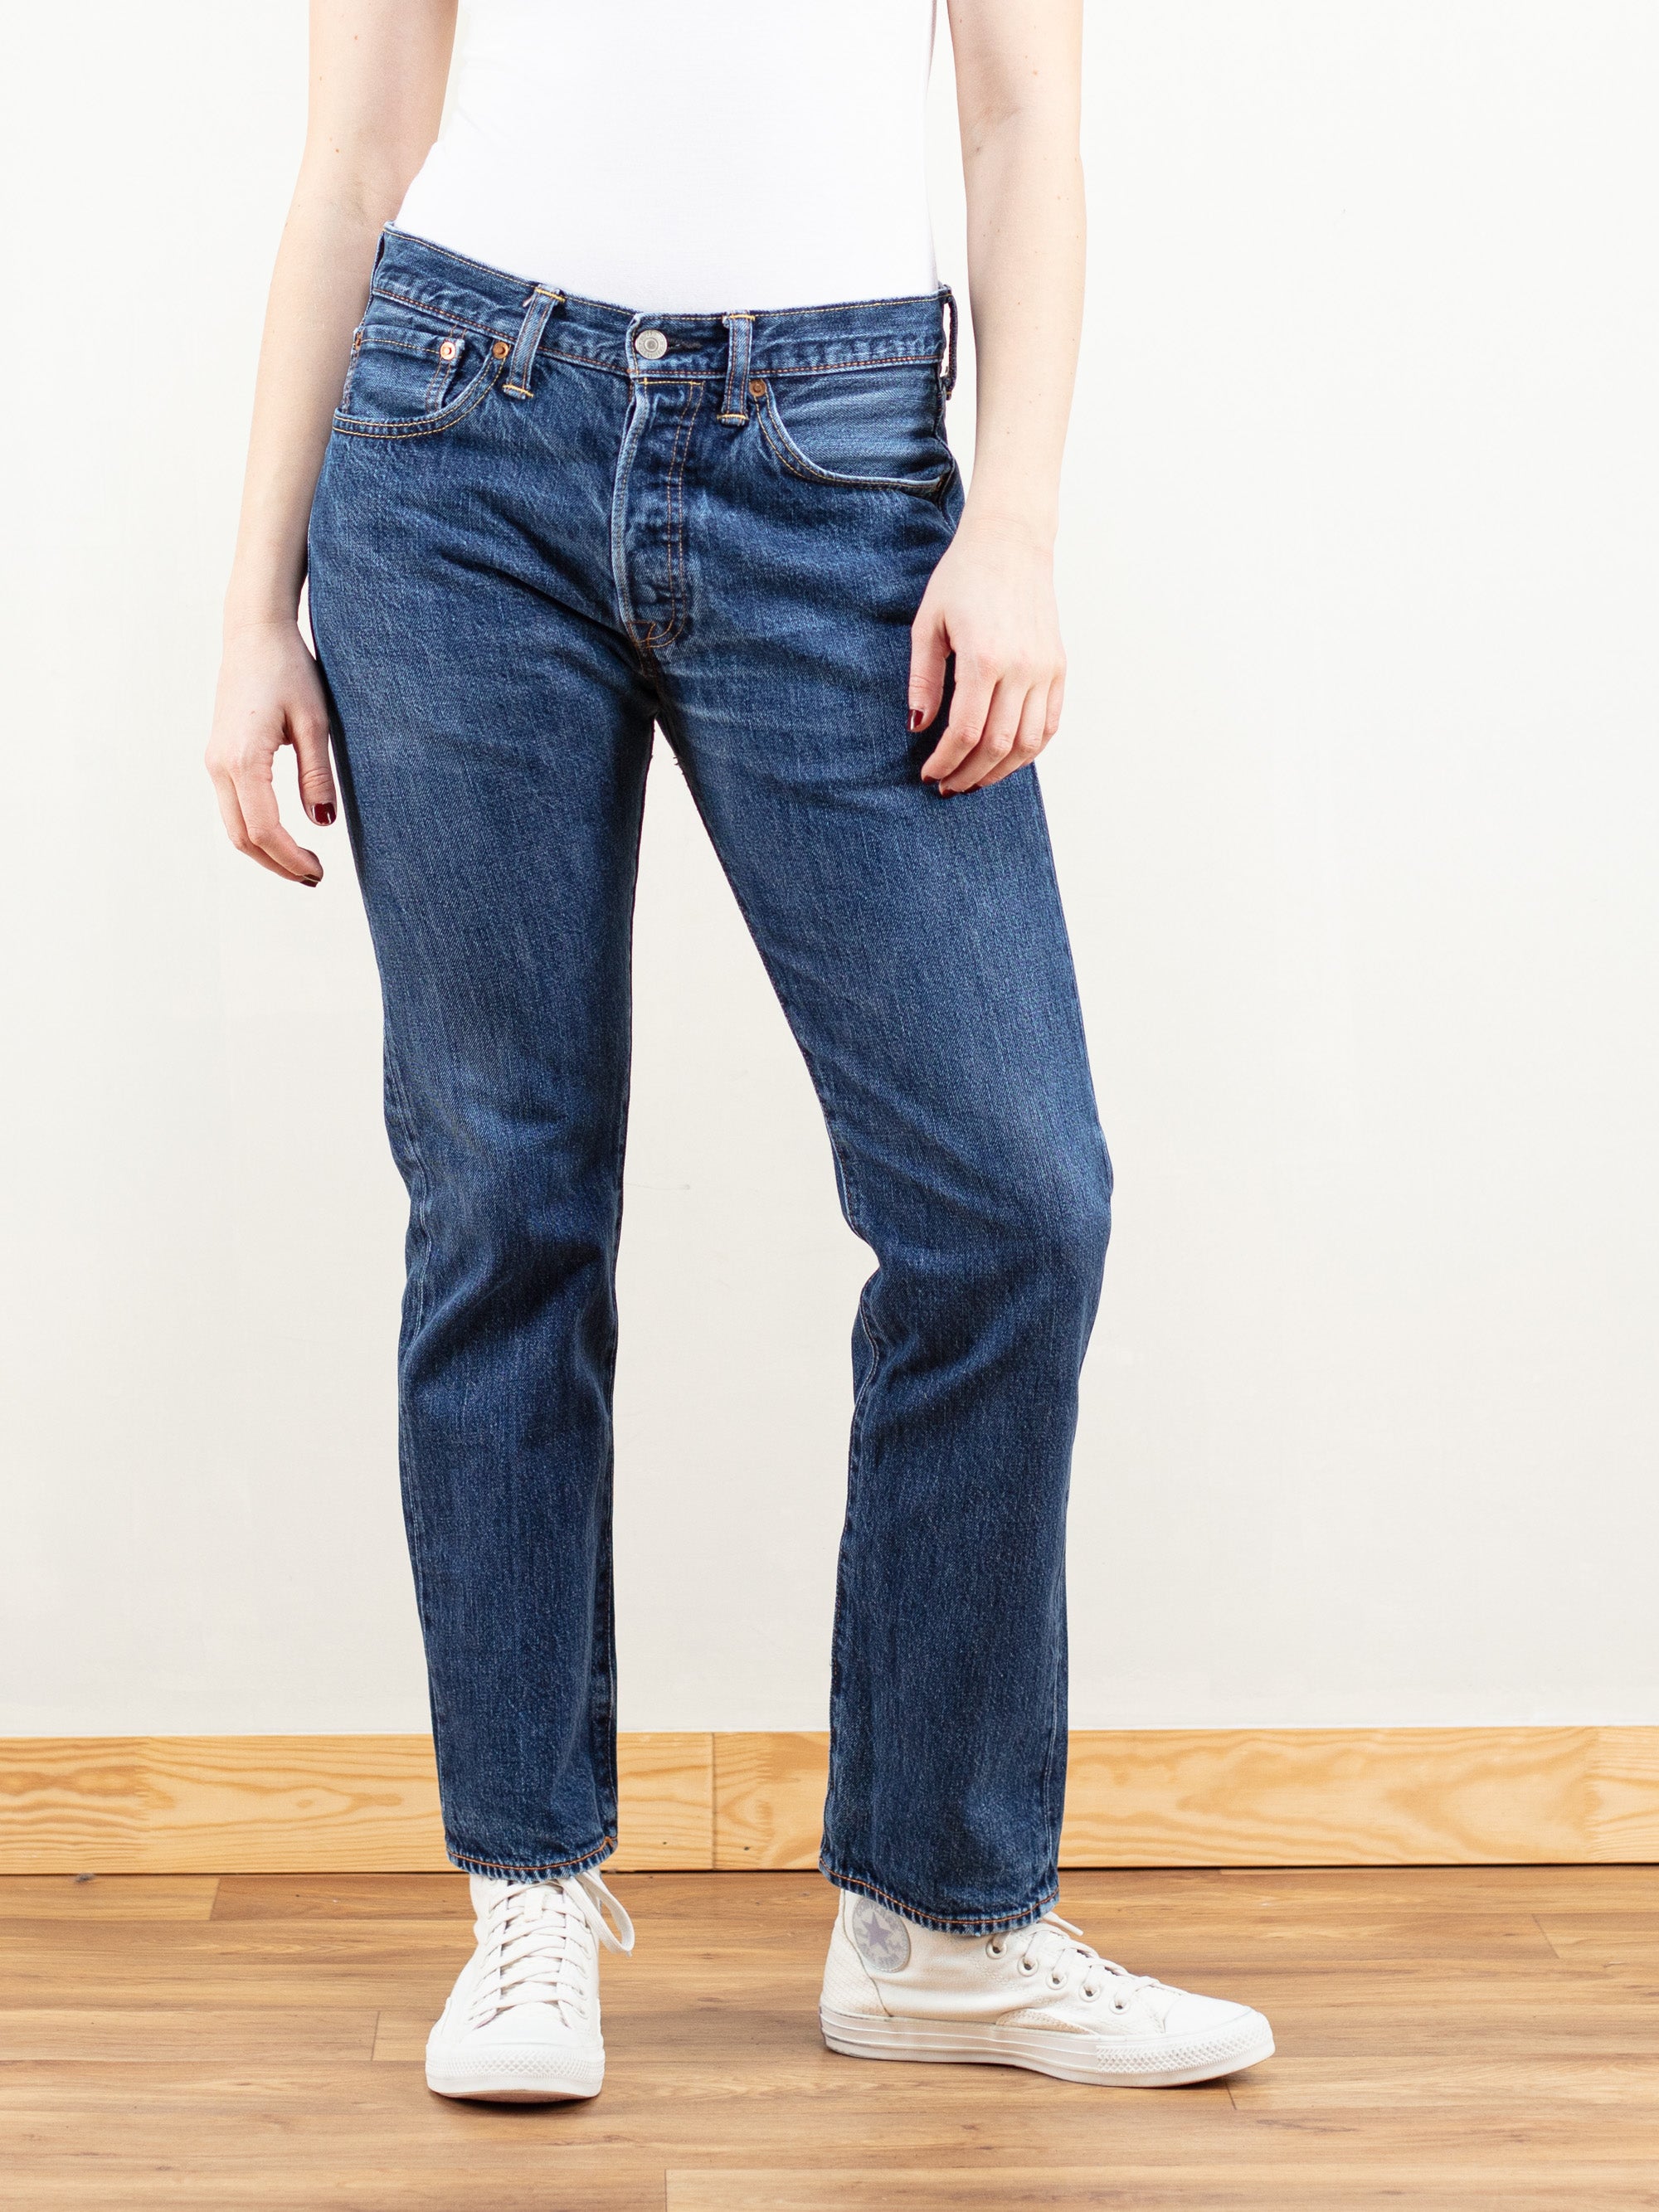 Online Vintage Store | 90's Women LEVIS Jeans | Northern Grip ...